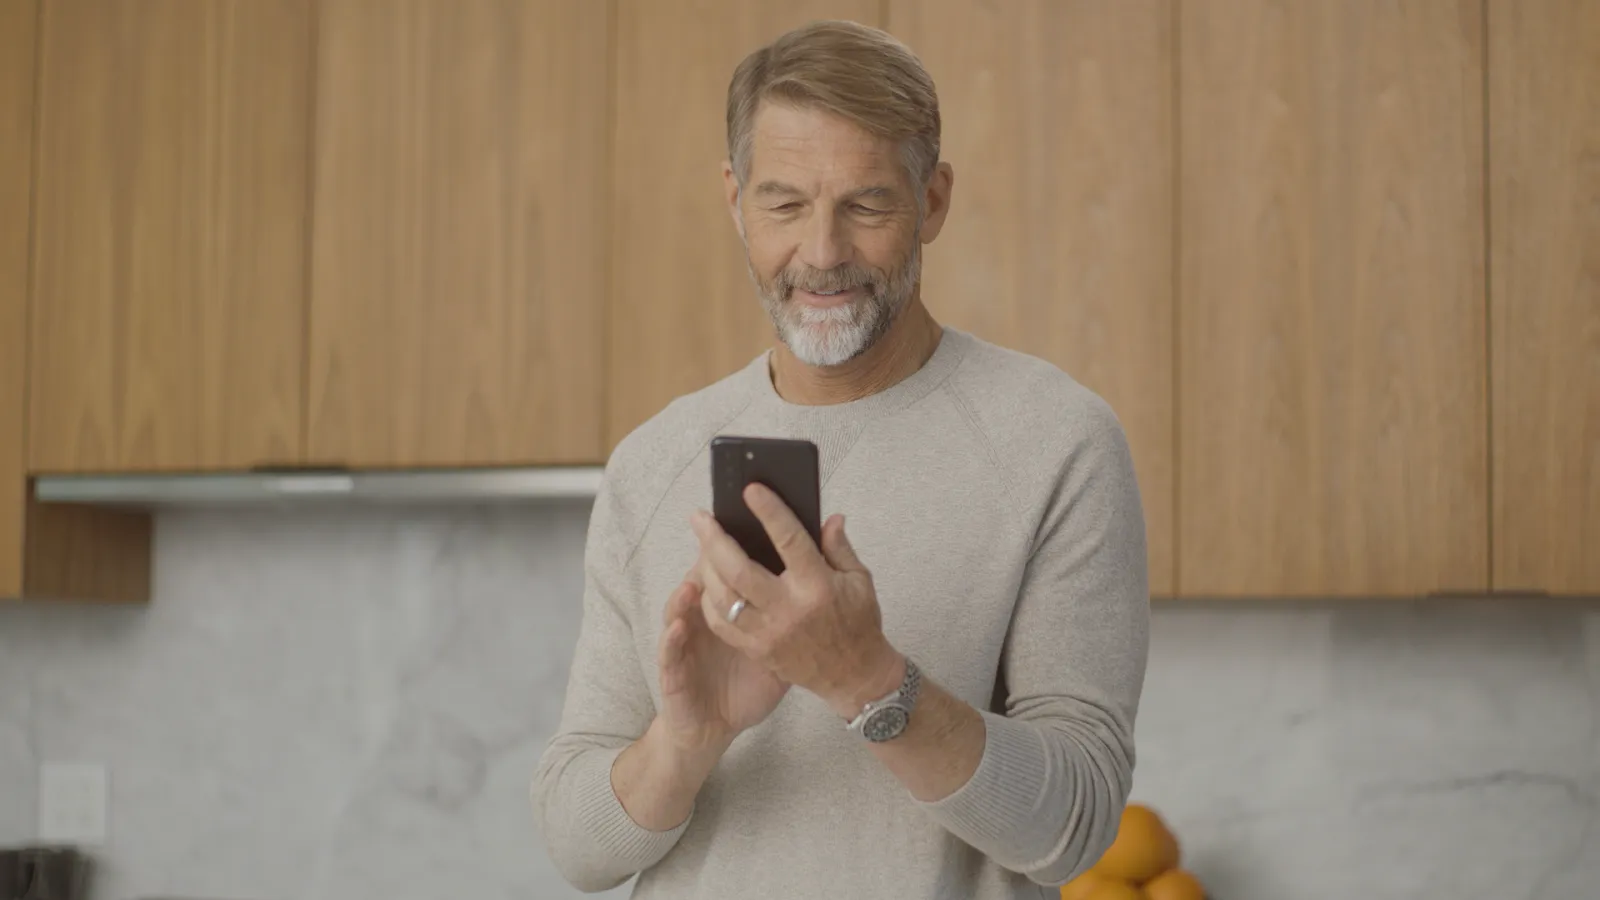 Mark using phone in kitchen